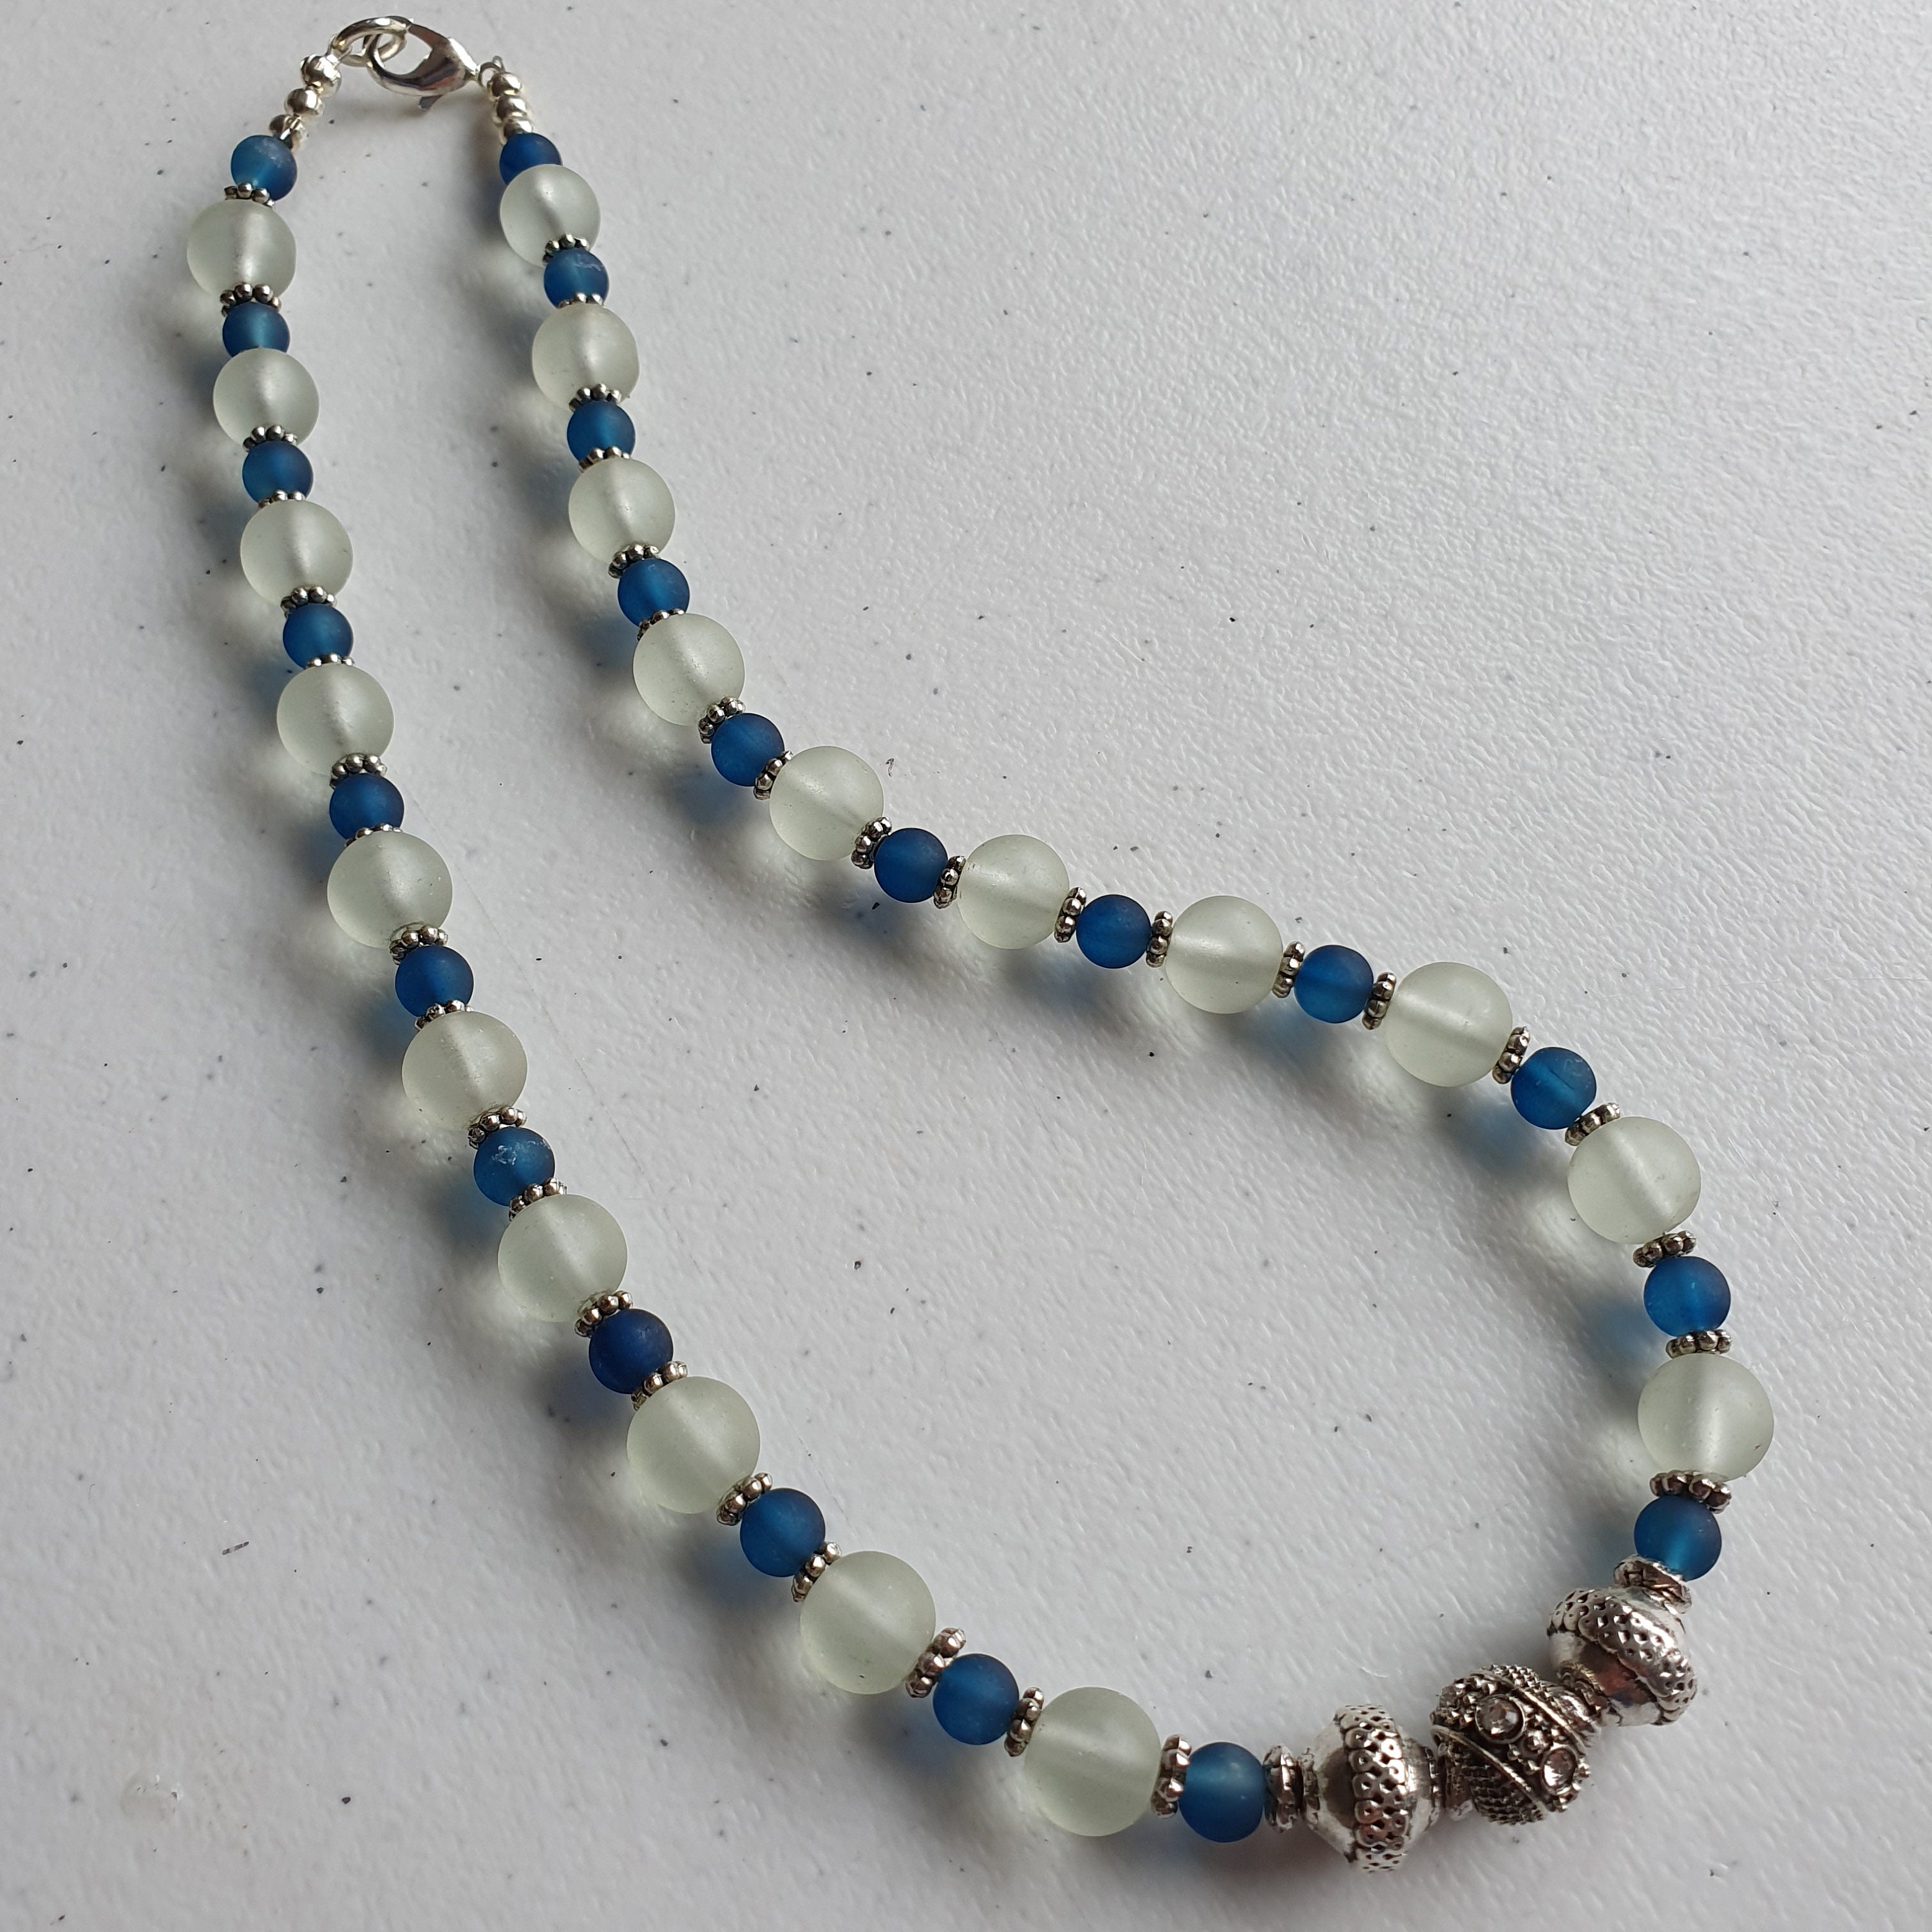 Teal Blue and Pale Blue Glass Beaded Necklace Bracelet - Etsy UK